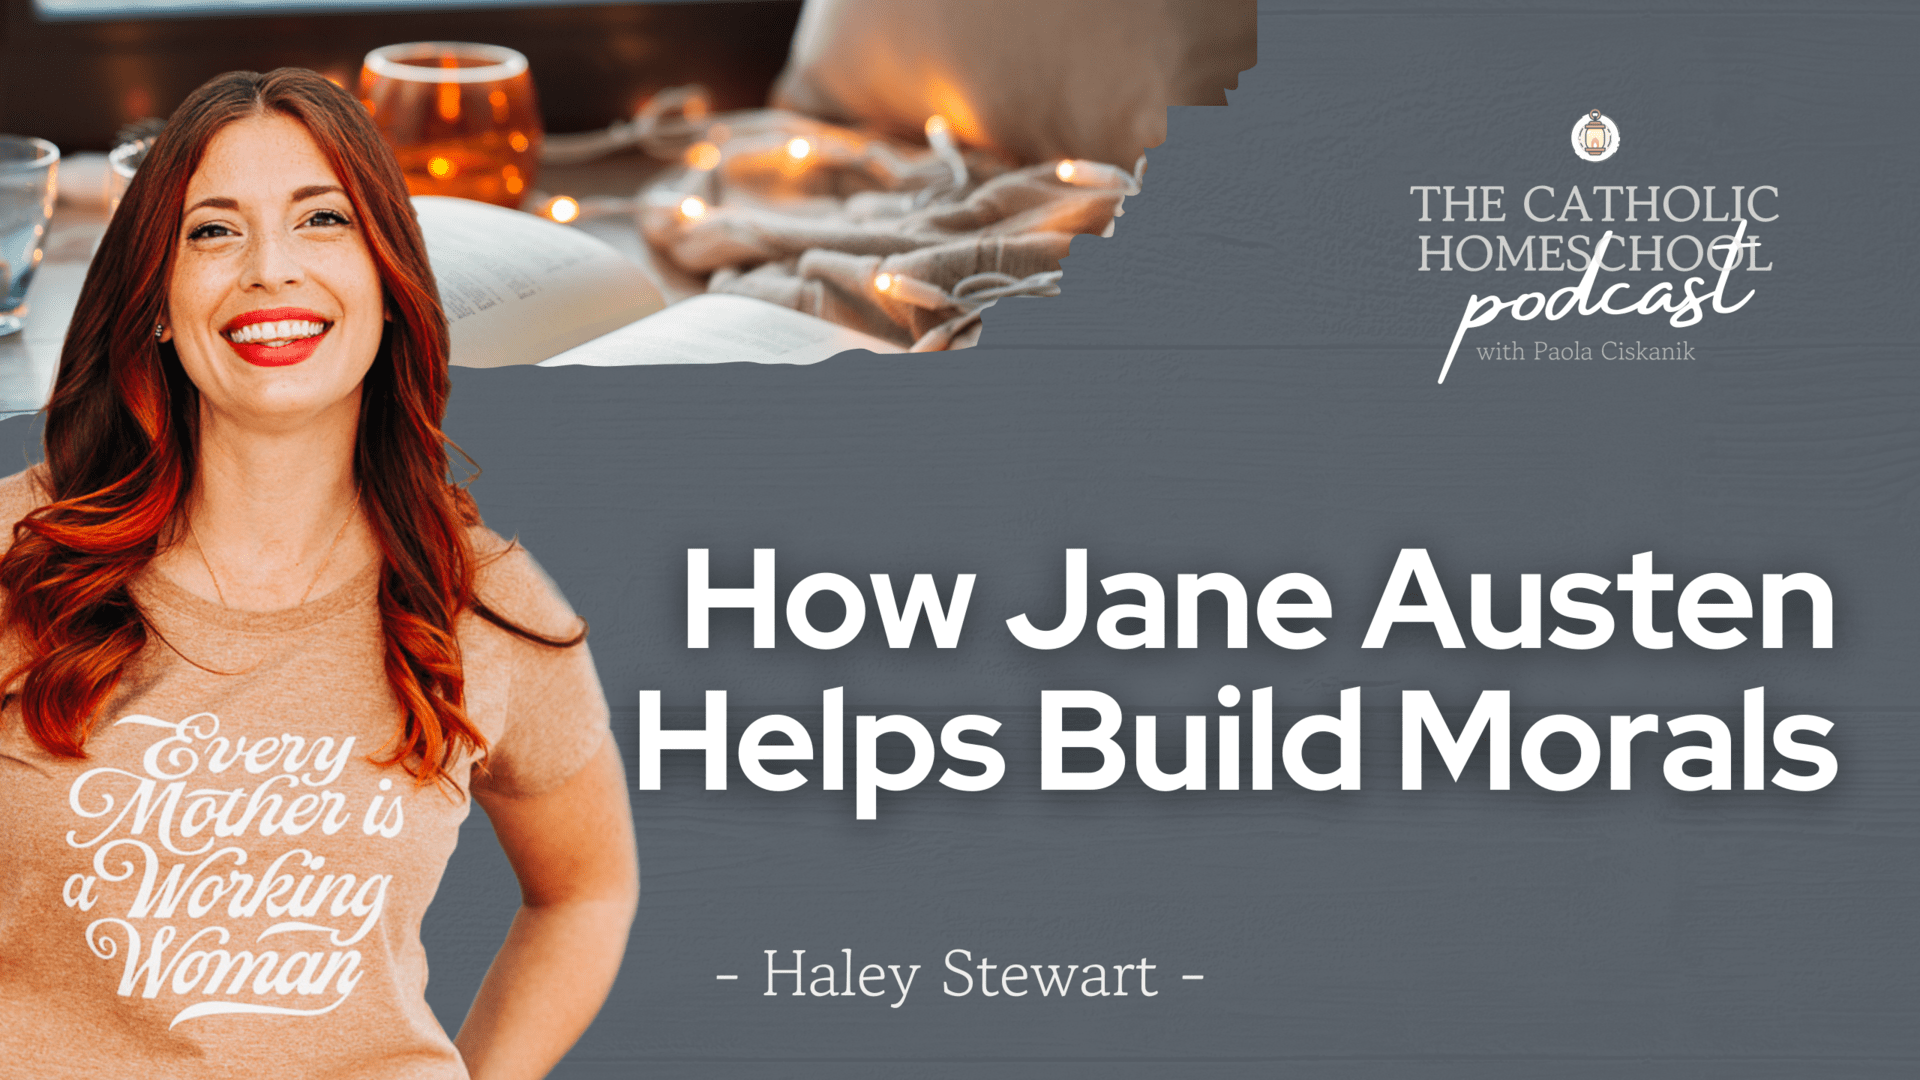 Haley Stewart | How Jane Austen Helps Build Morals | The Catholic Homeschool Podcast